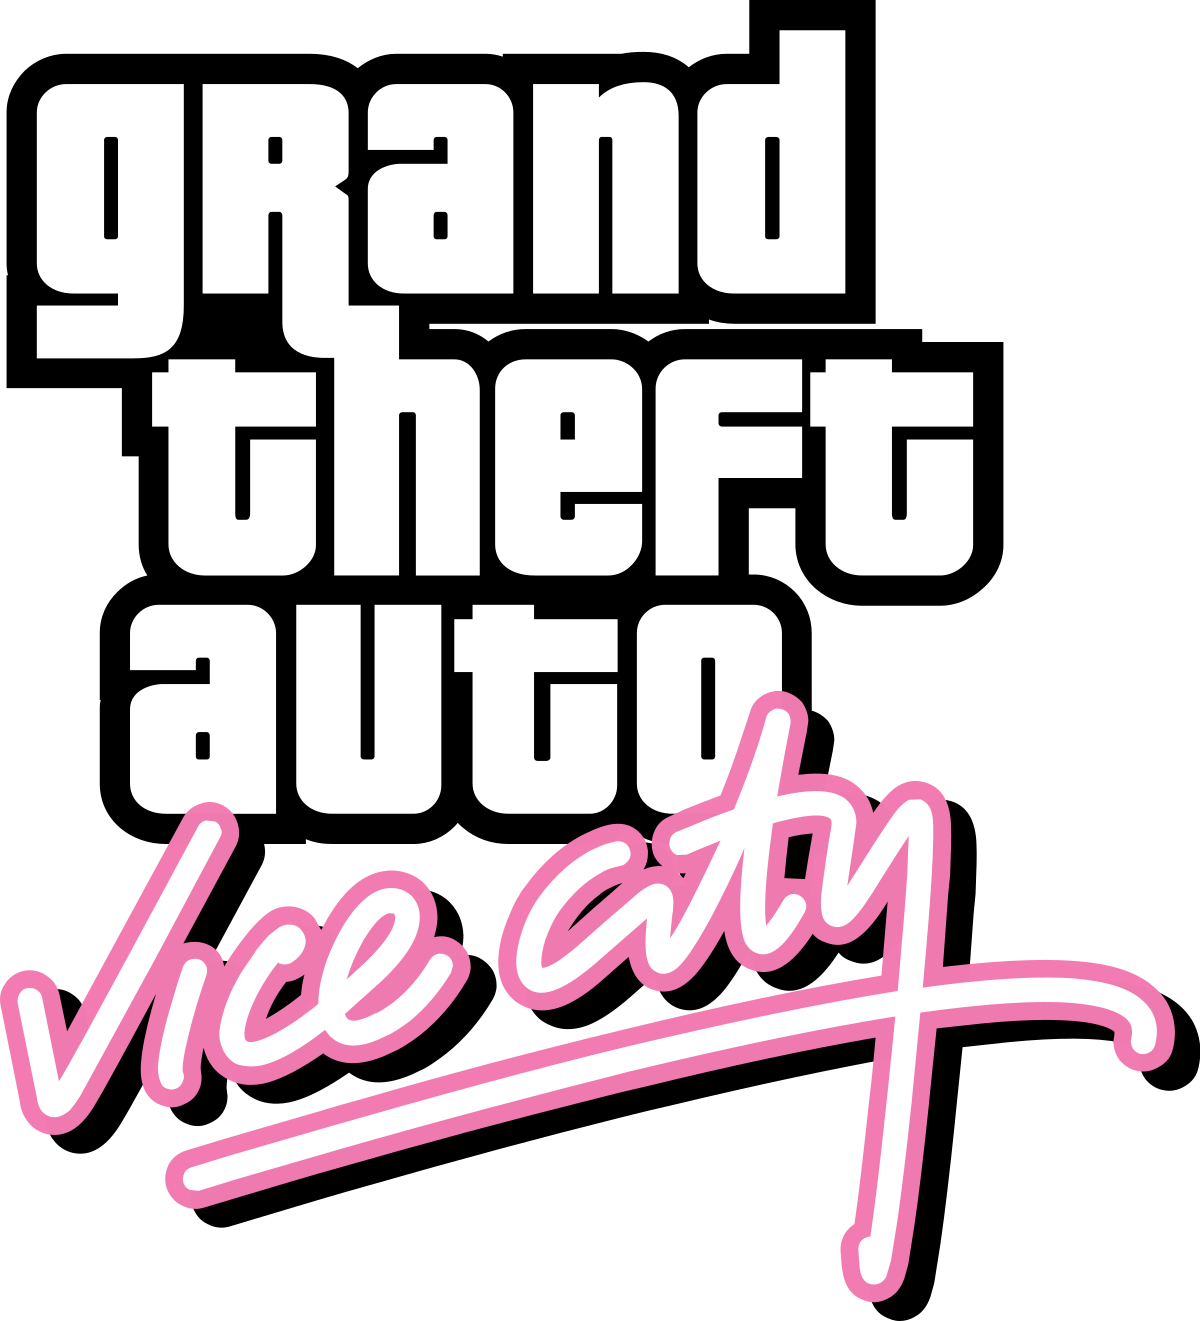 Grand Theft Auto Vice City Logo PNG Photos